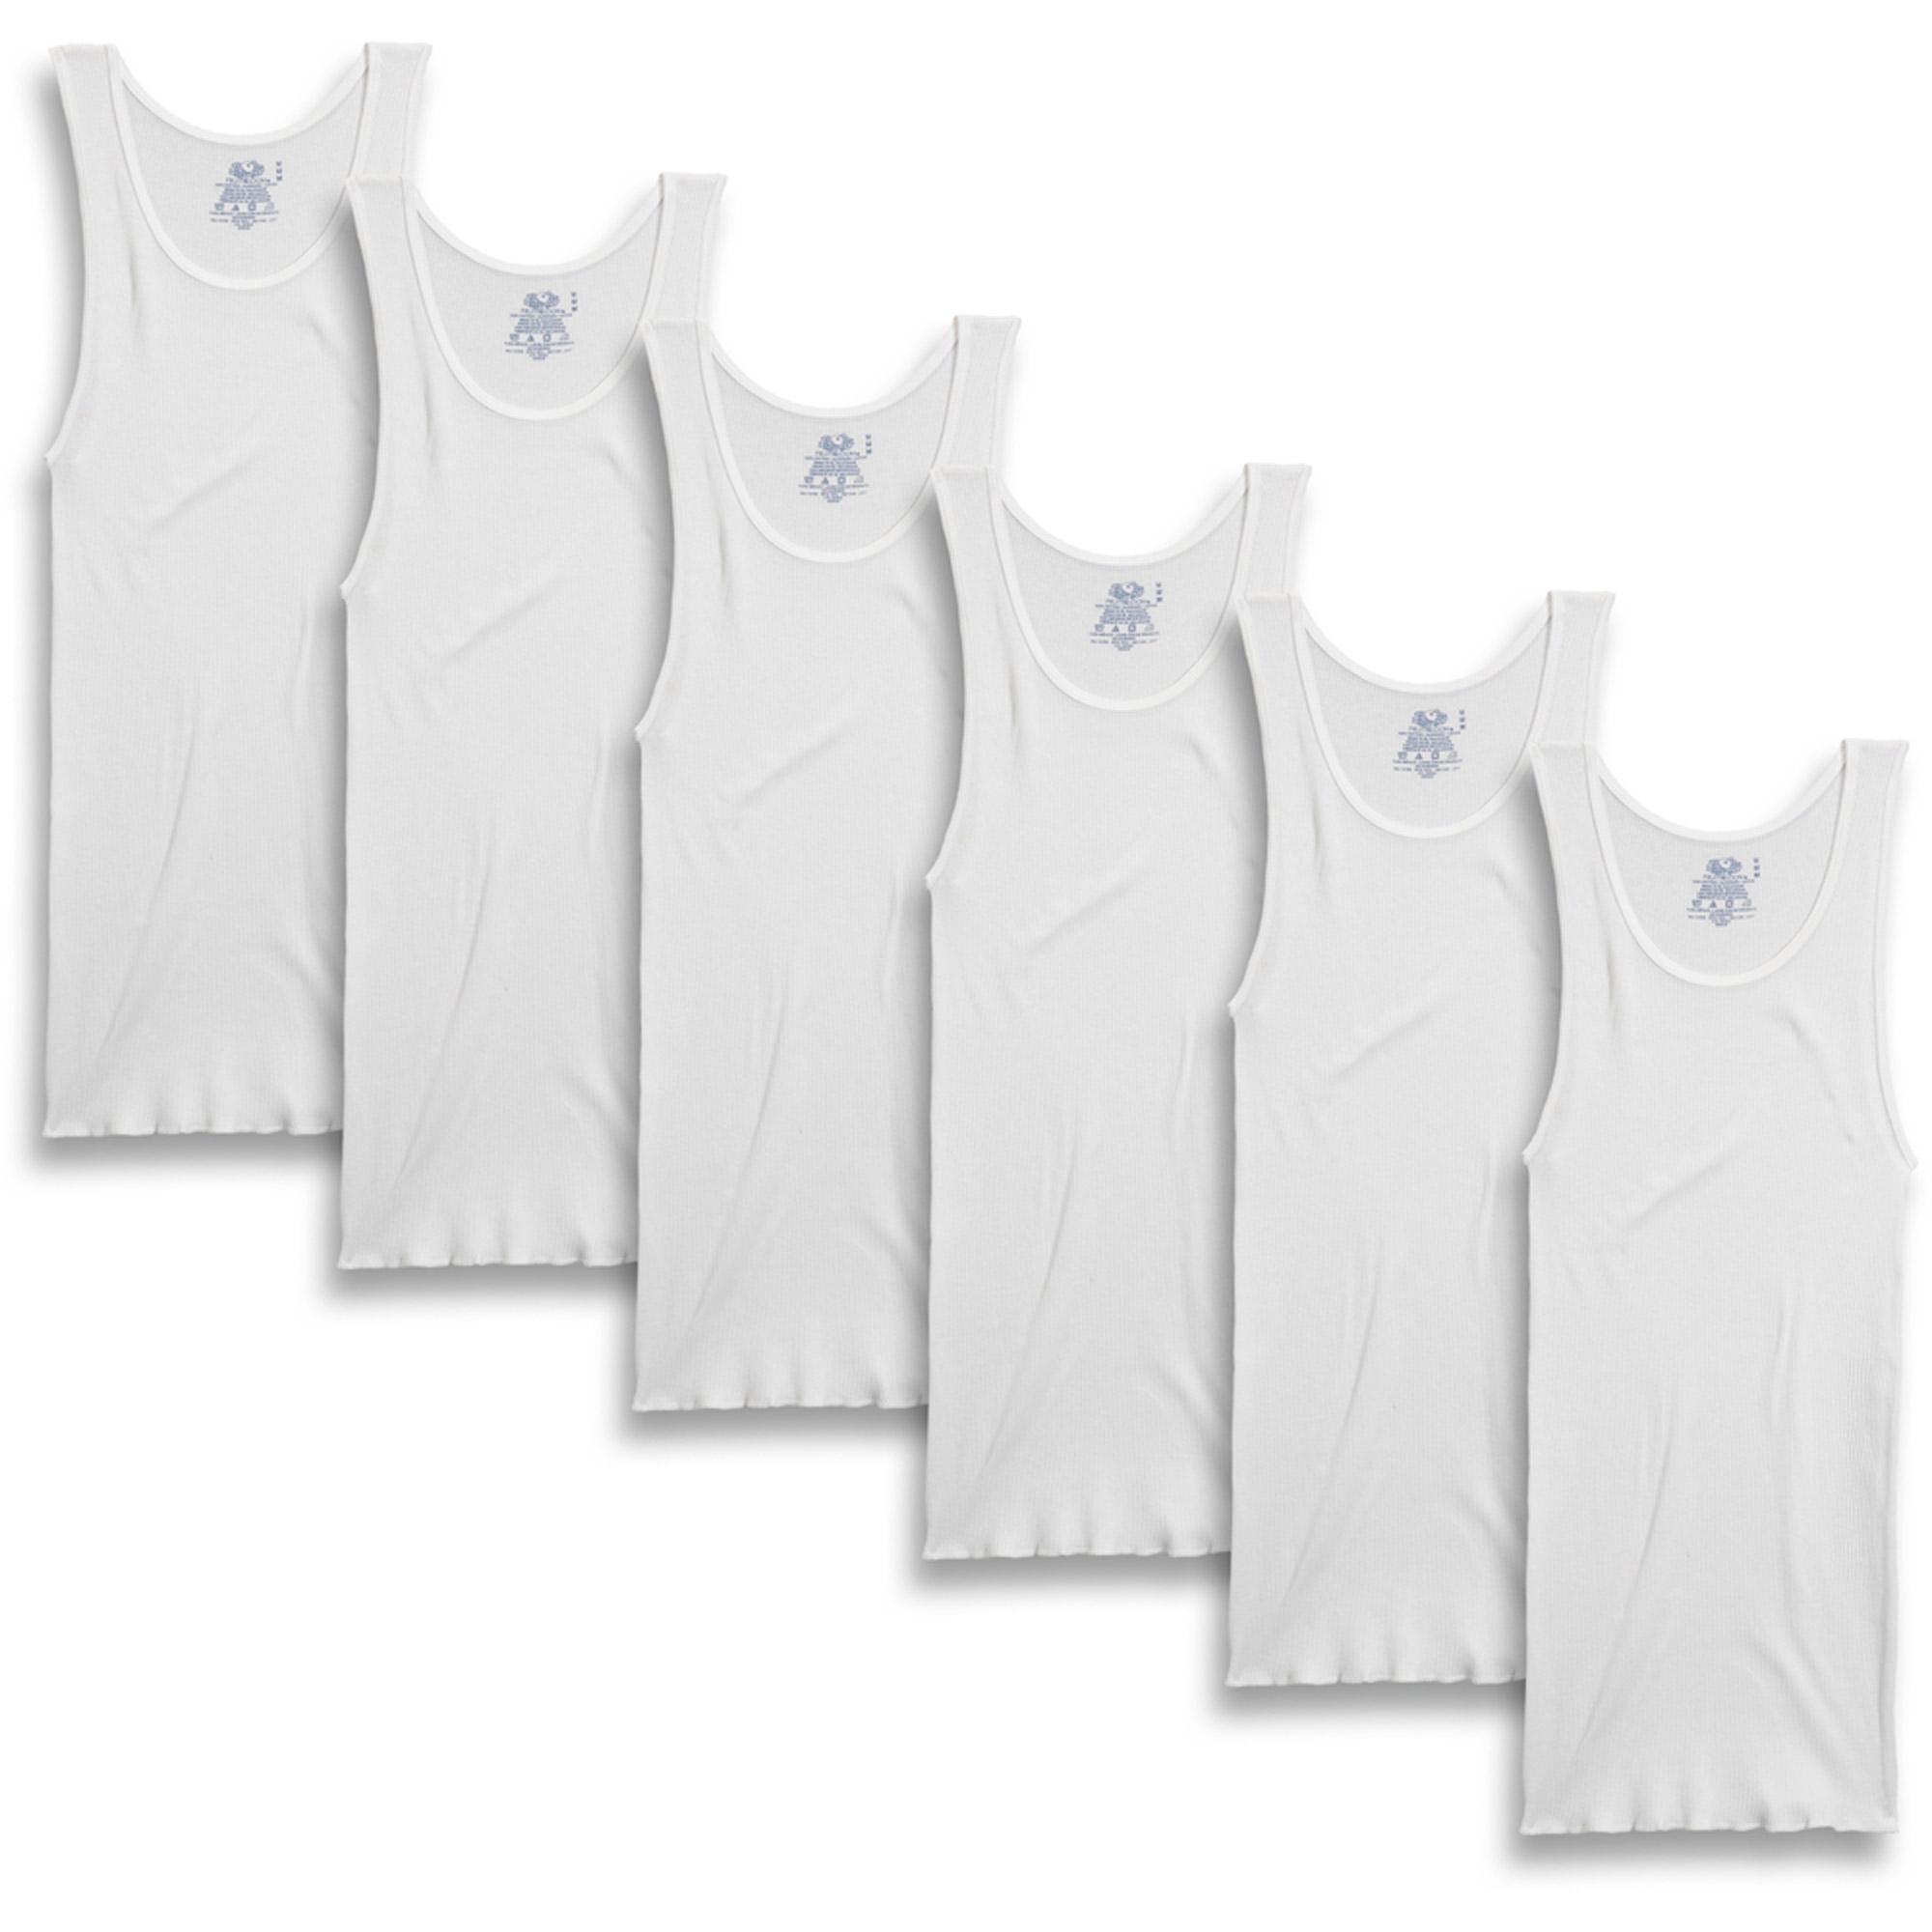 Men's White A-Shirts, 6 Pack